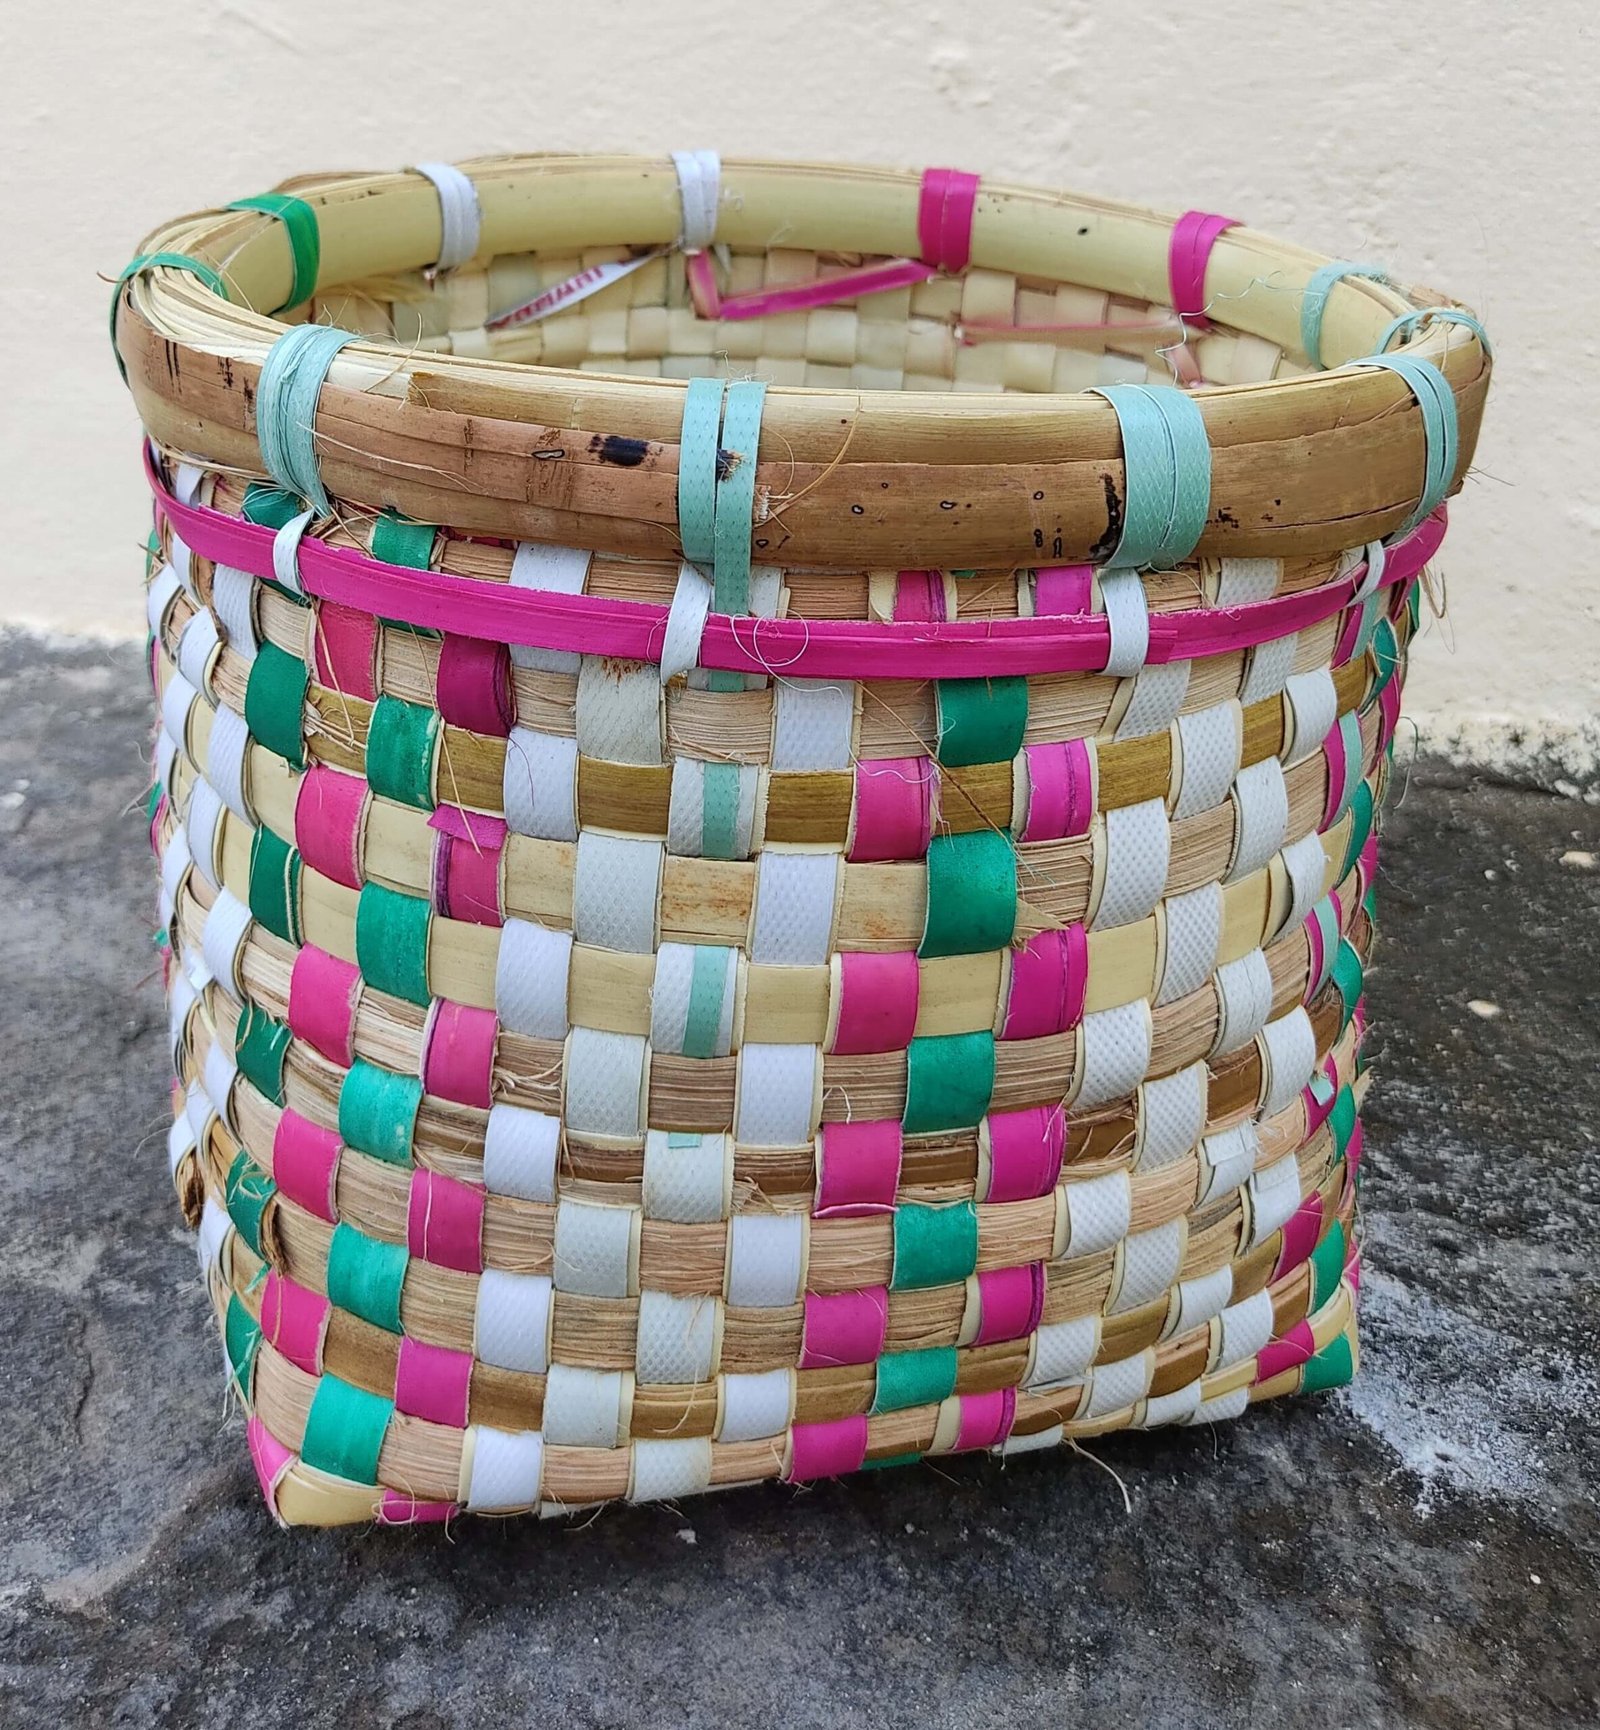 Ganesan Palm Baskets